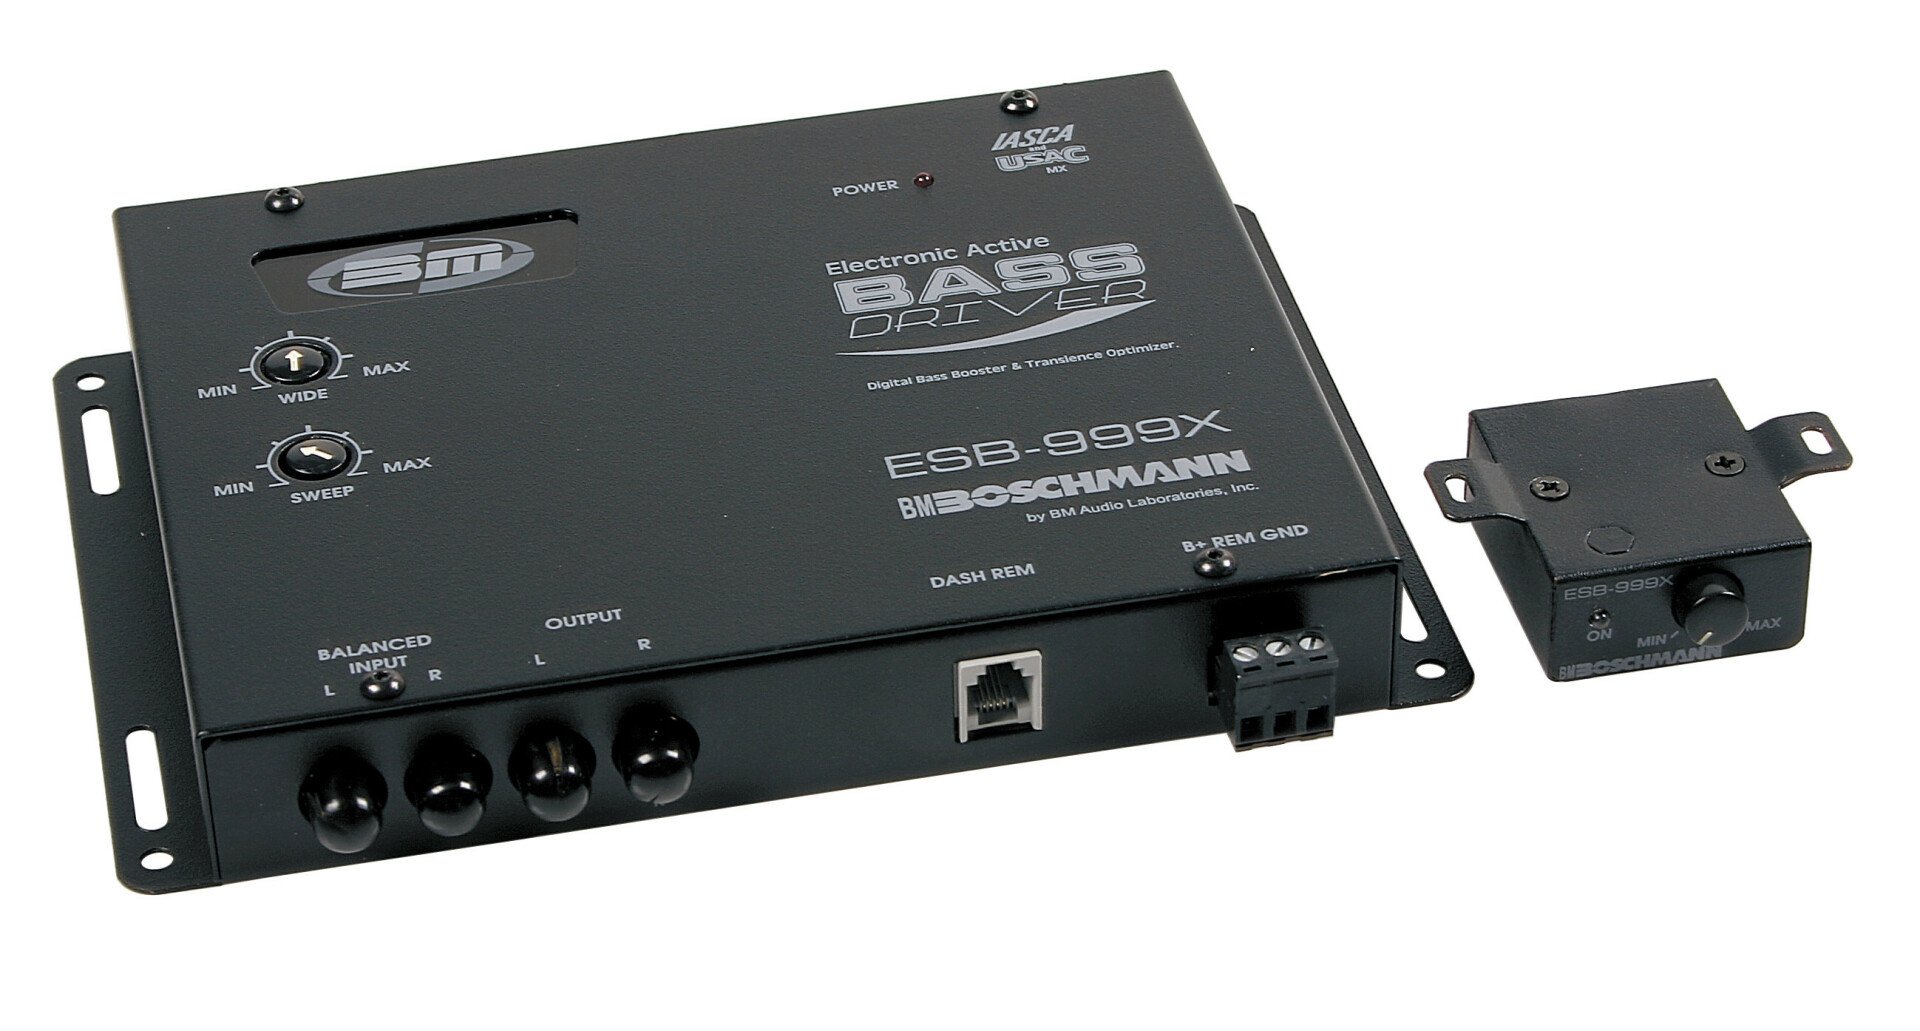 ESB-999X - Bass Driver - 1 pcs - Resealed thumb